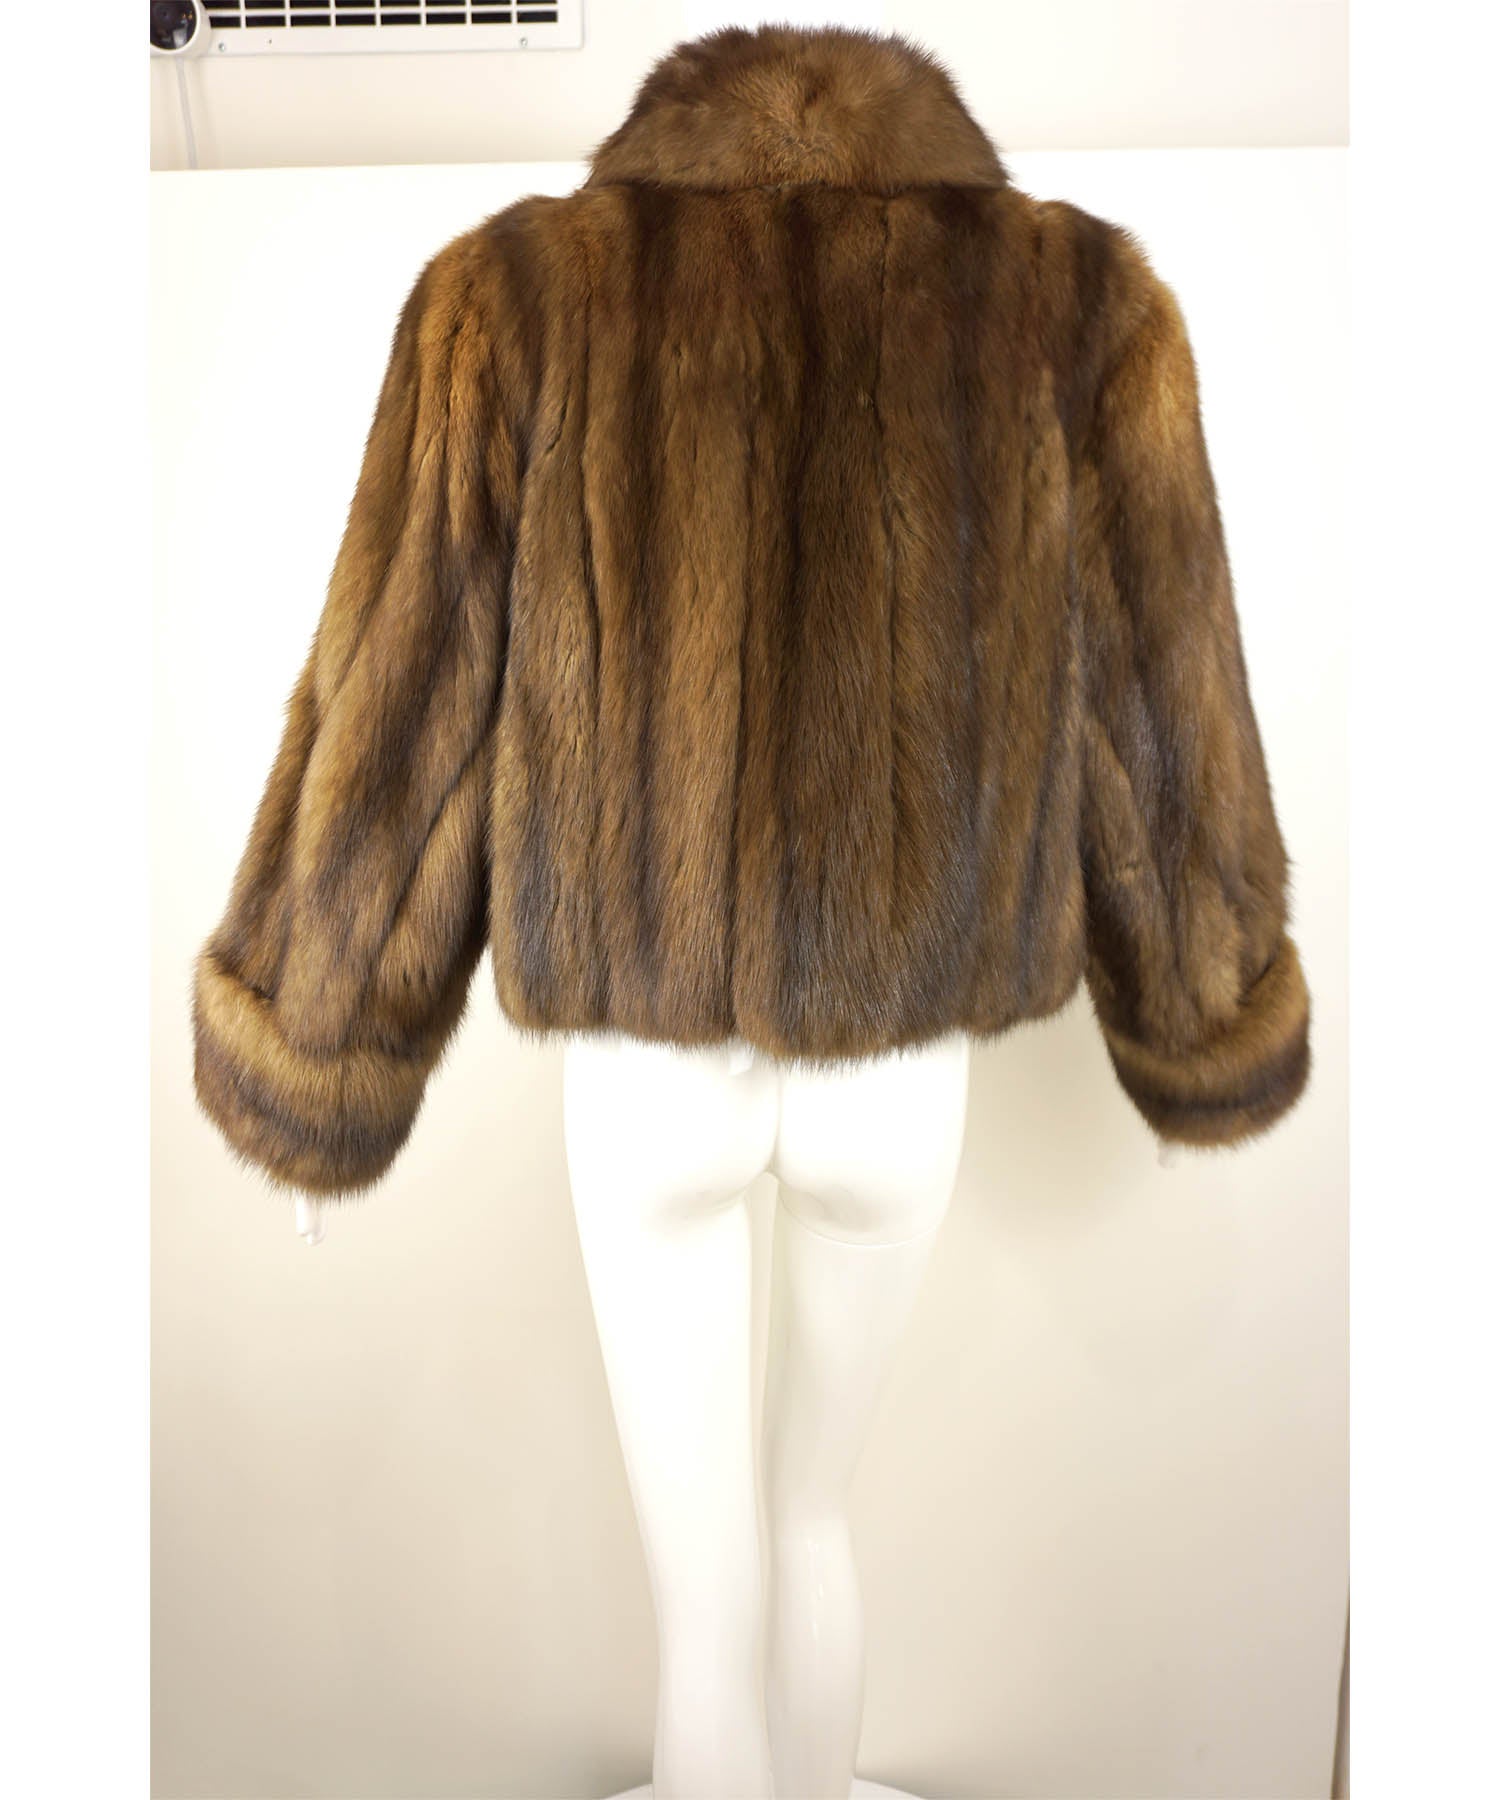 Williams Furs Vintage Sable Coat 1980's 1st - Foxy Couture Carmel